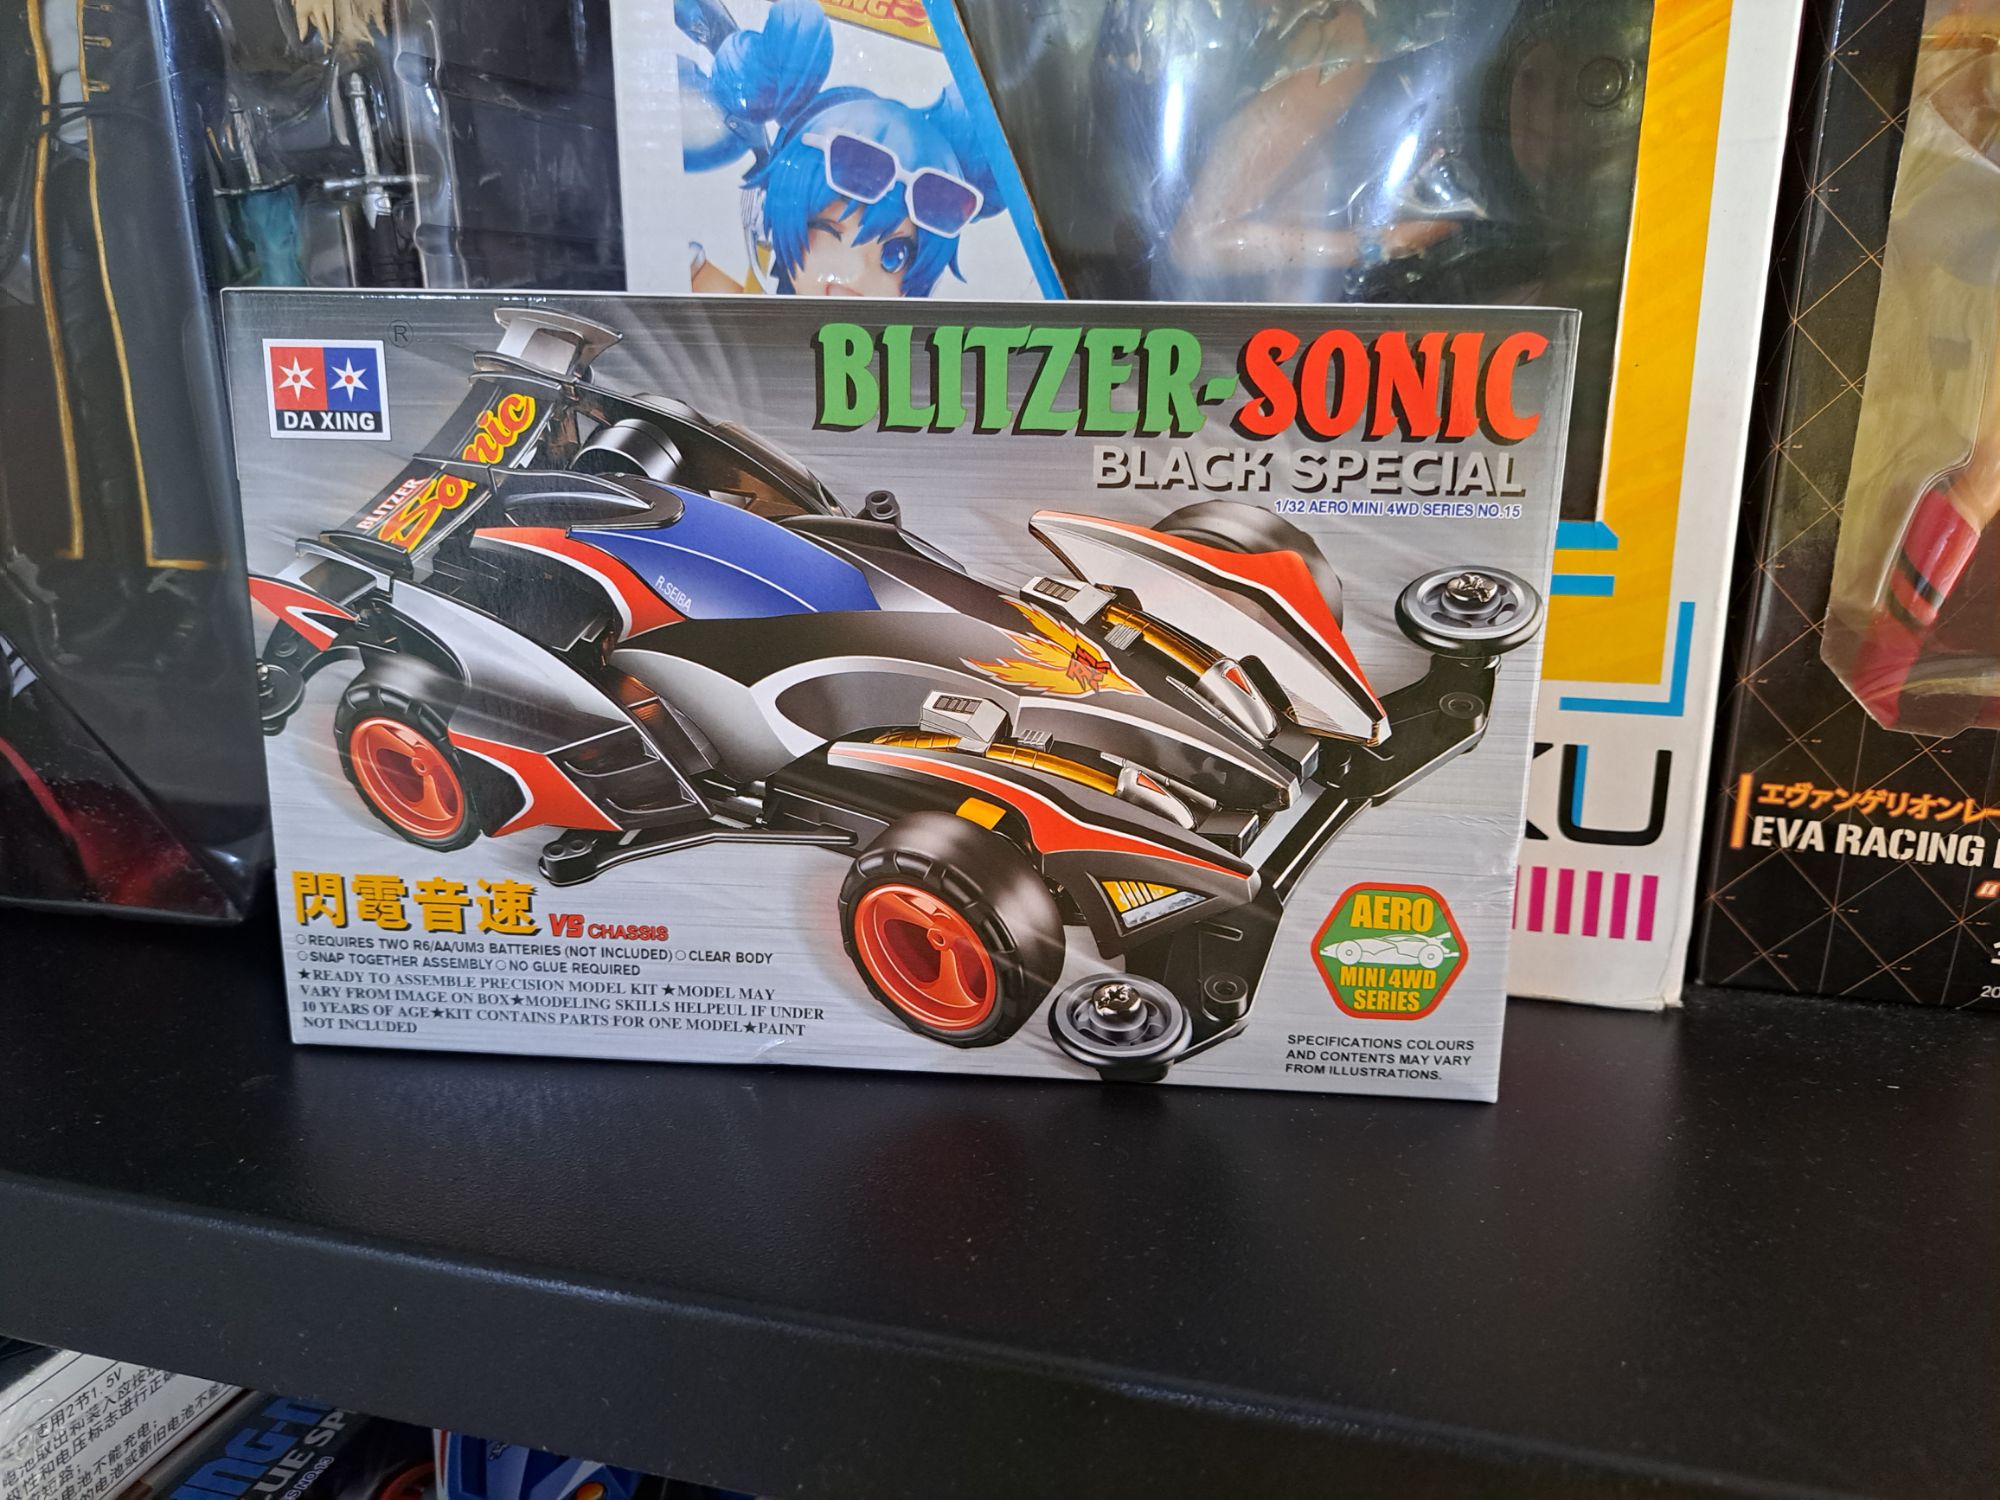 Da Xing Blitzer Sonic Black Special mini 4wd kit(Tamiya Copy)